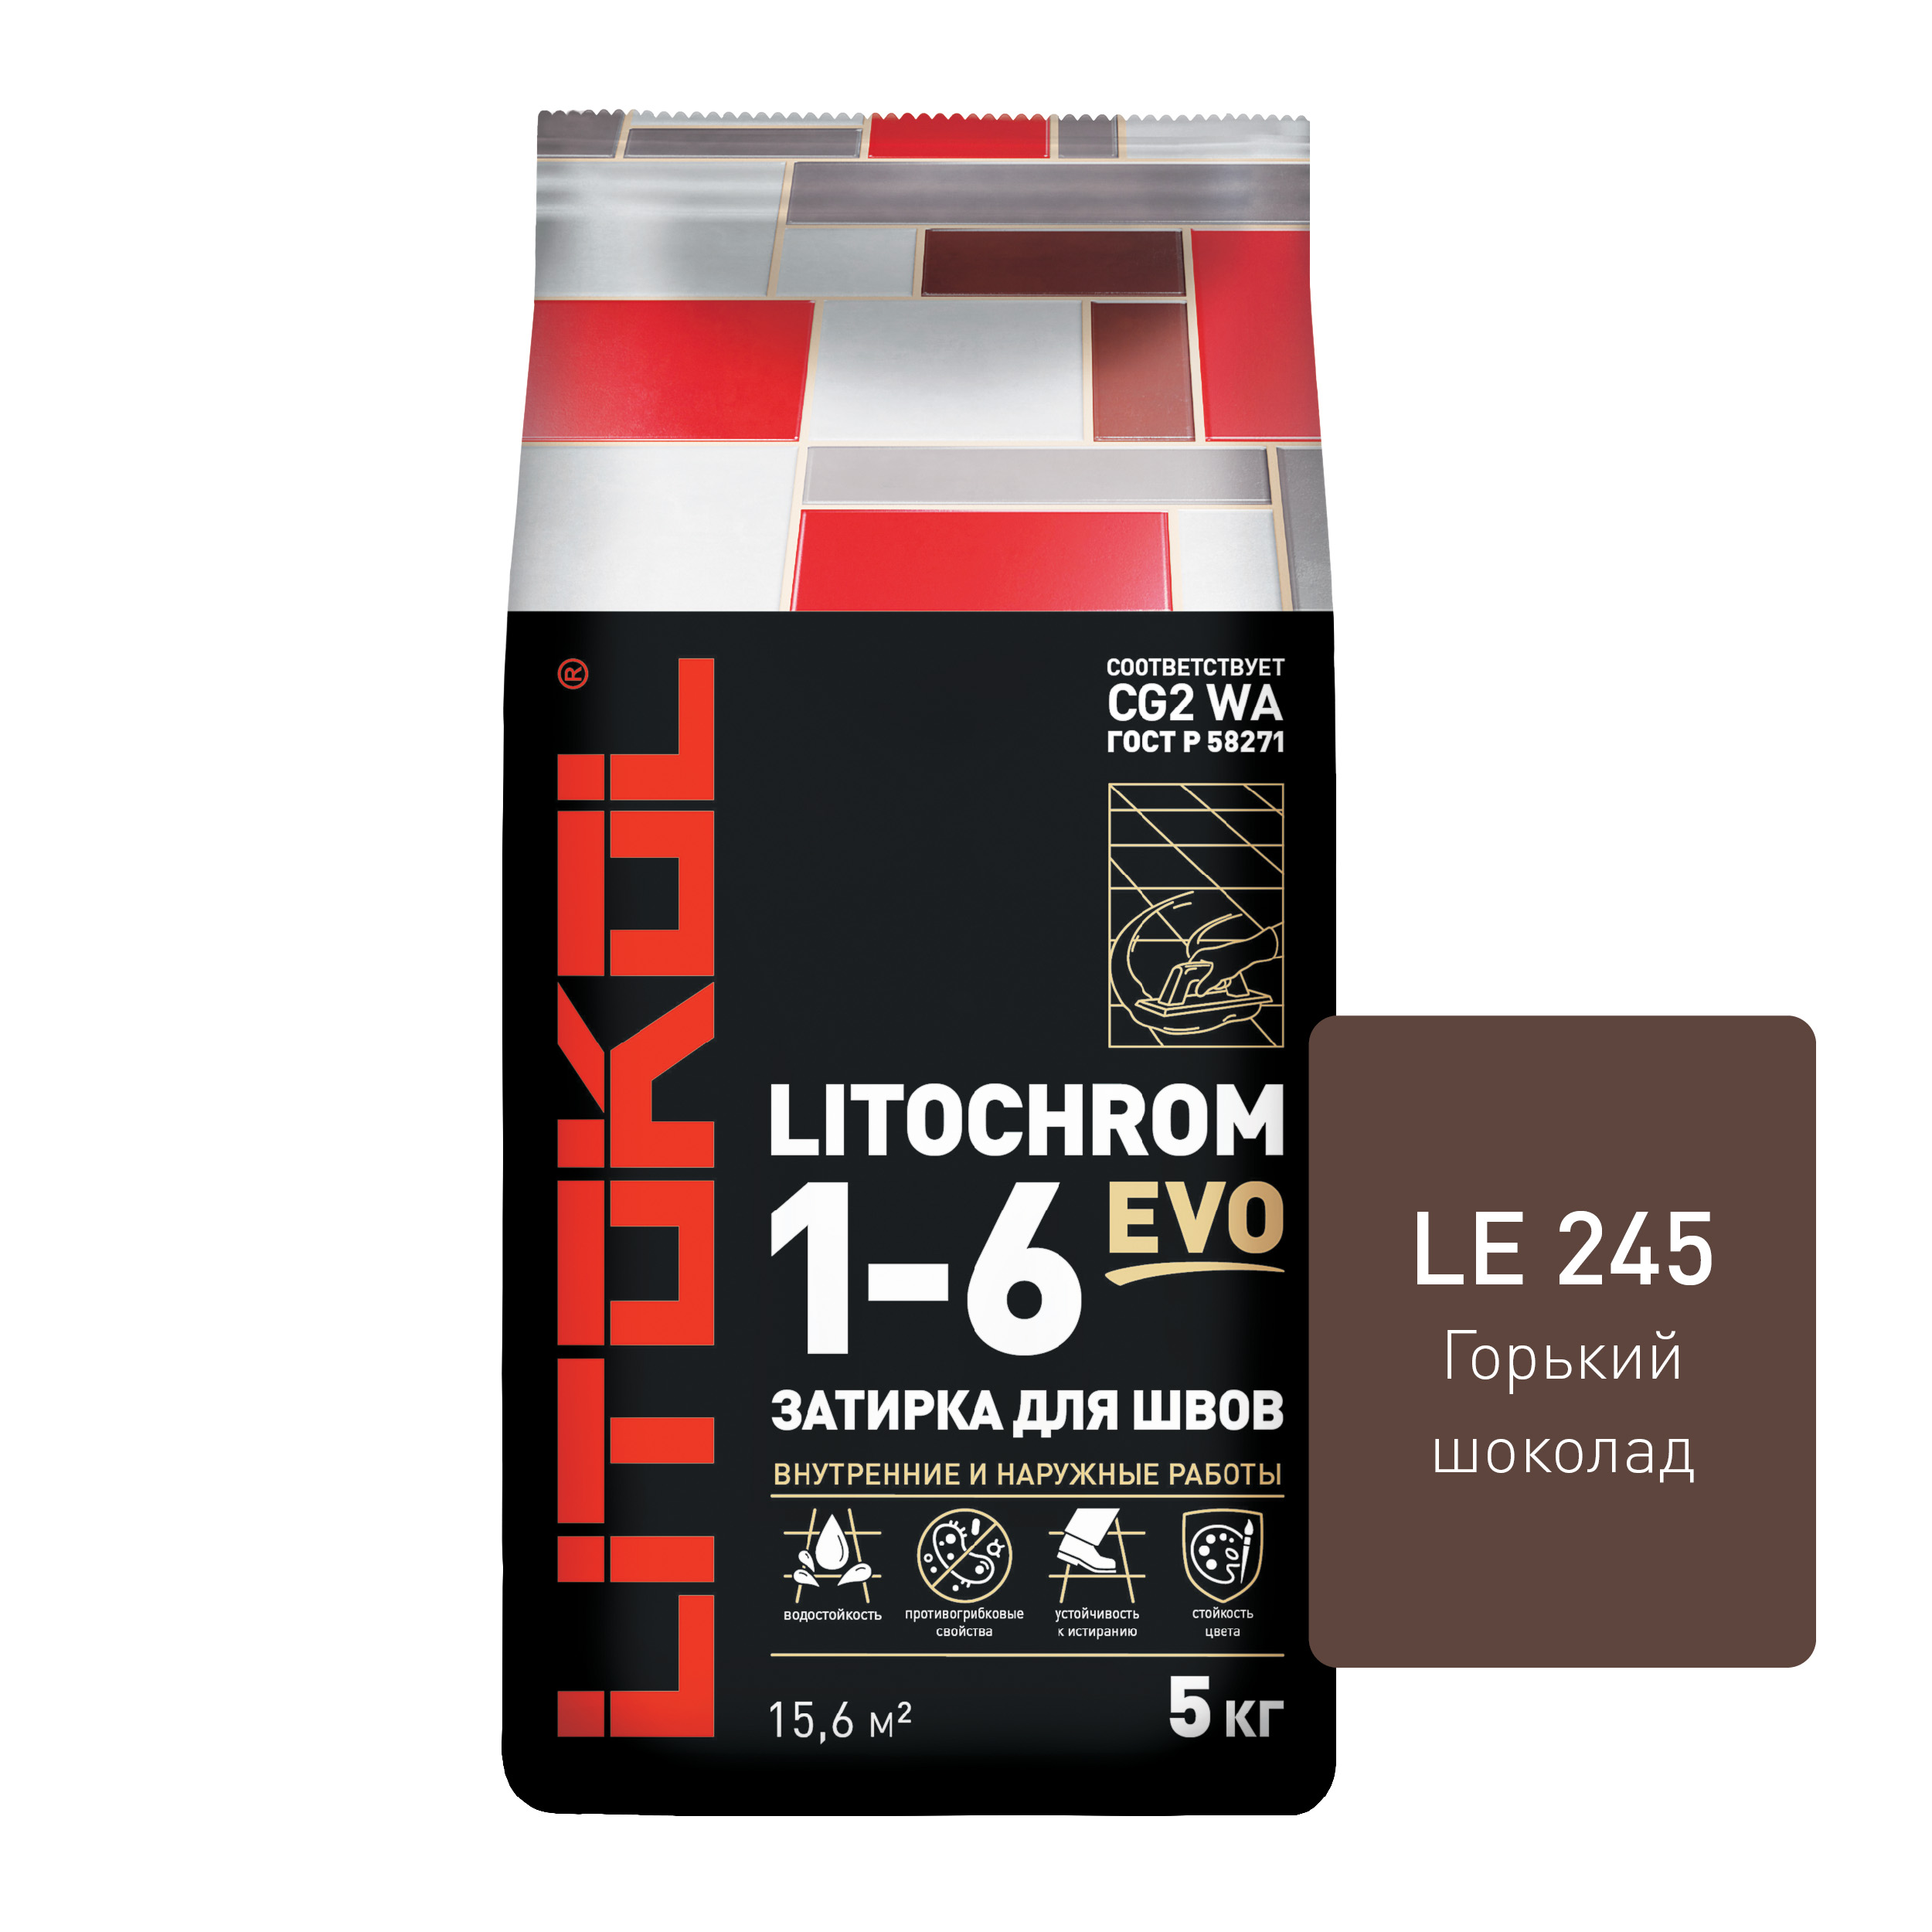 Цементная затирка LITOKOL LITOCHROM 1-6 EVO LE.245 Горький шоколад, 5 кг затирка цементная litokol litochrom 1 6 evo le 245 горький шоколад 2 кг